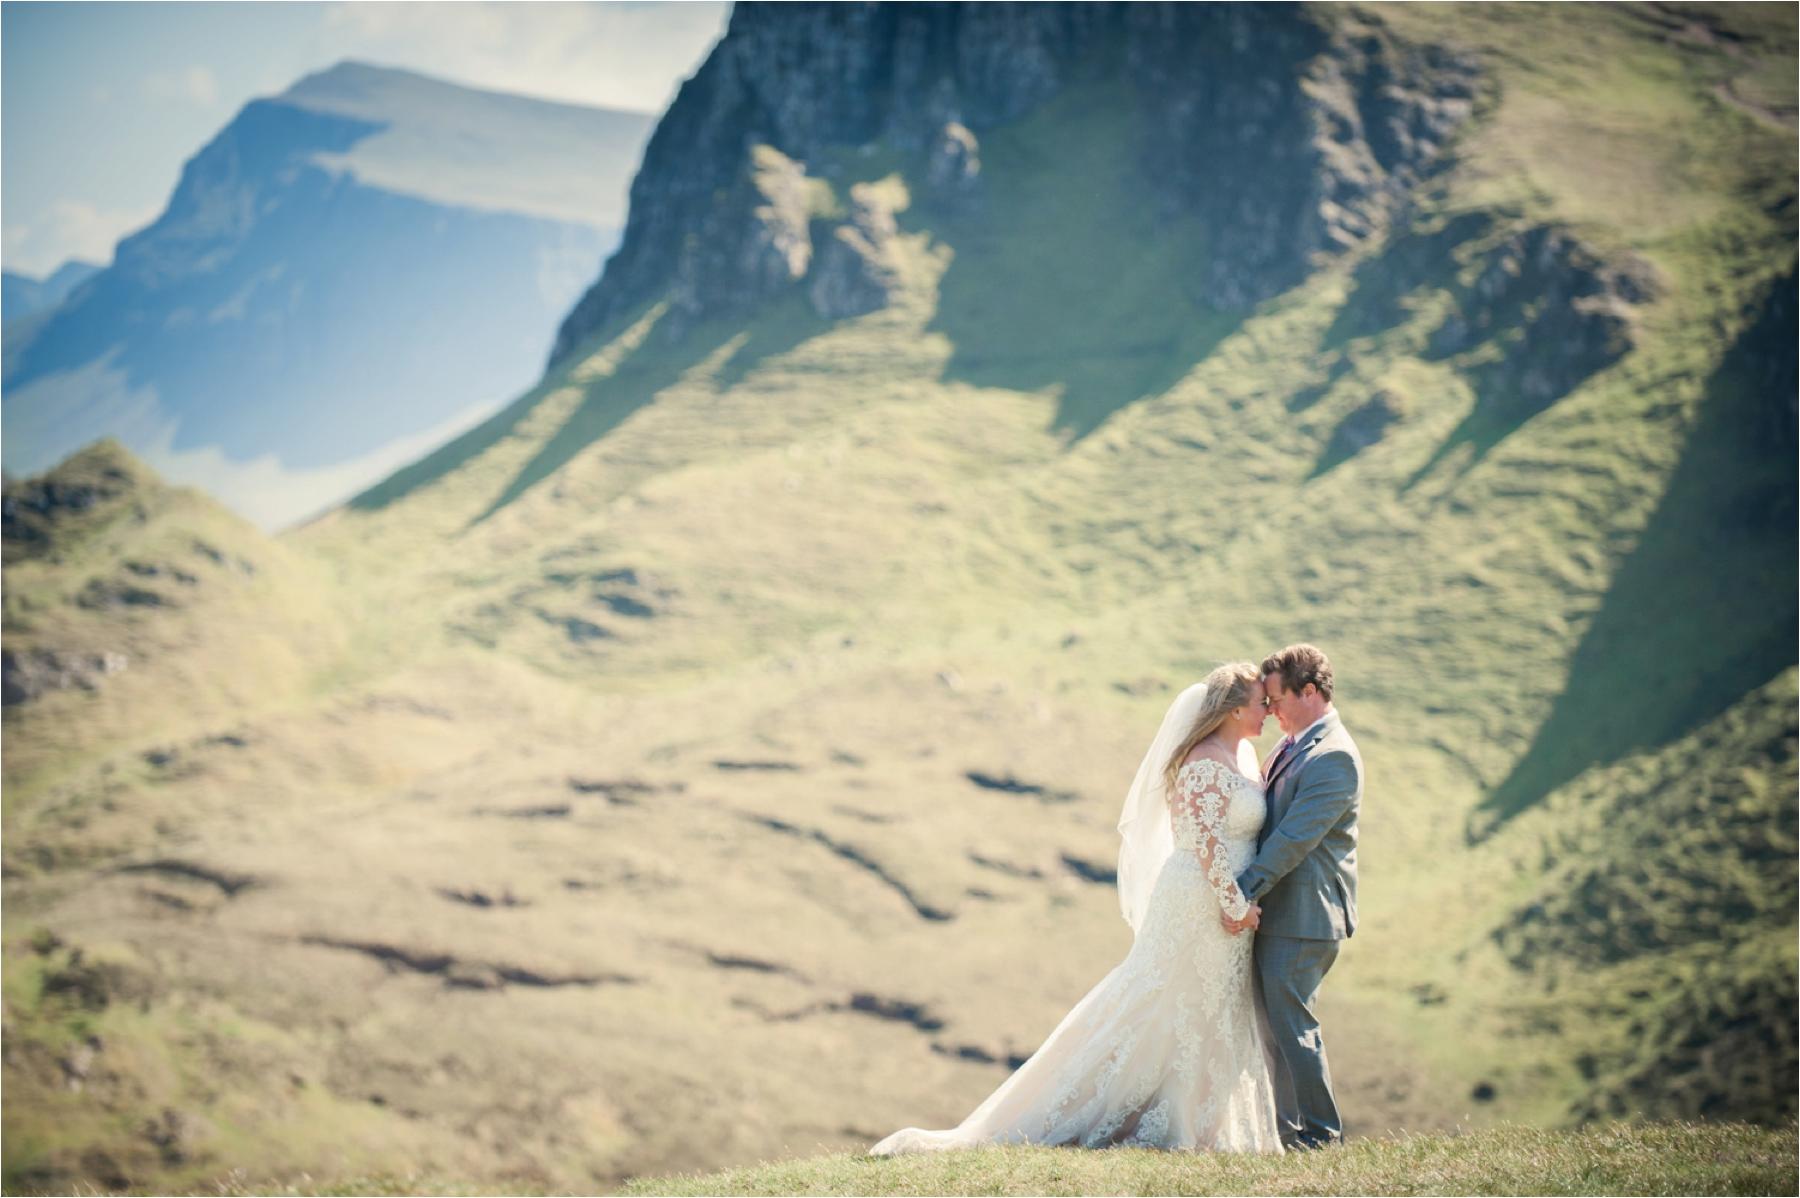 Julie & Brent’s Isle of Skye elopement